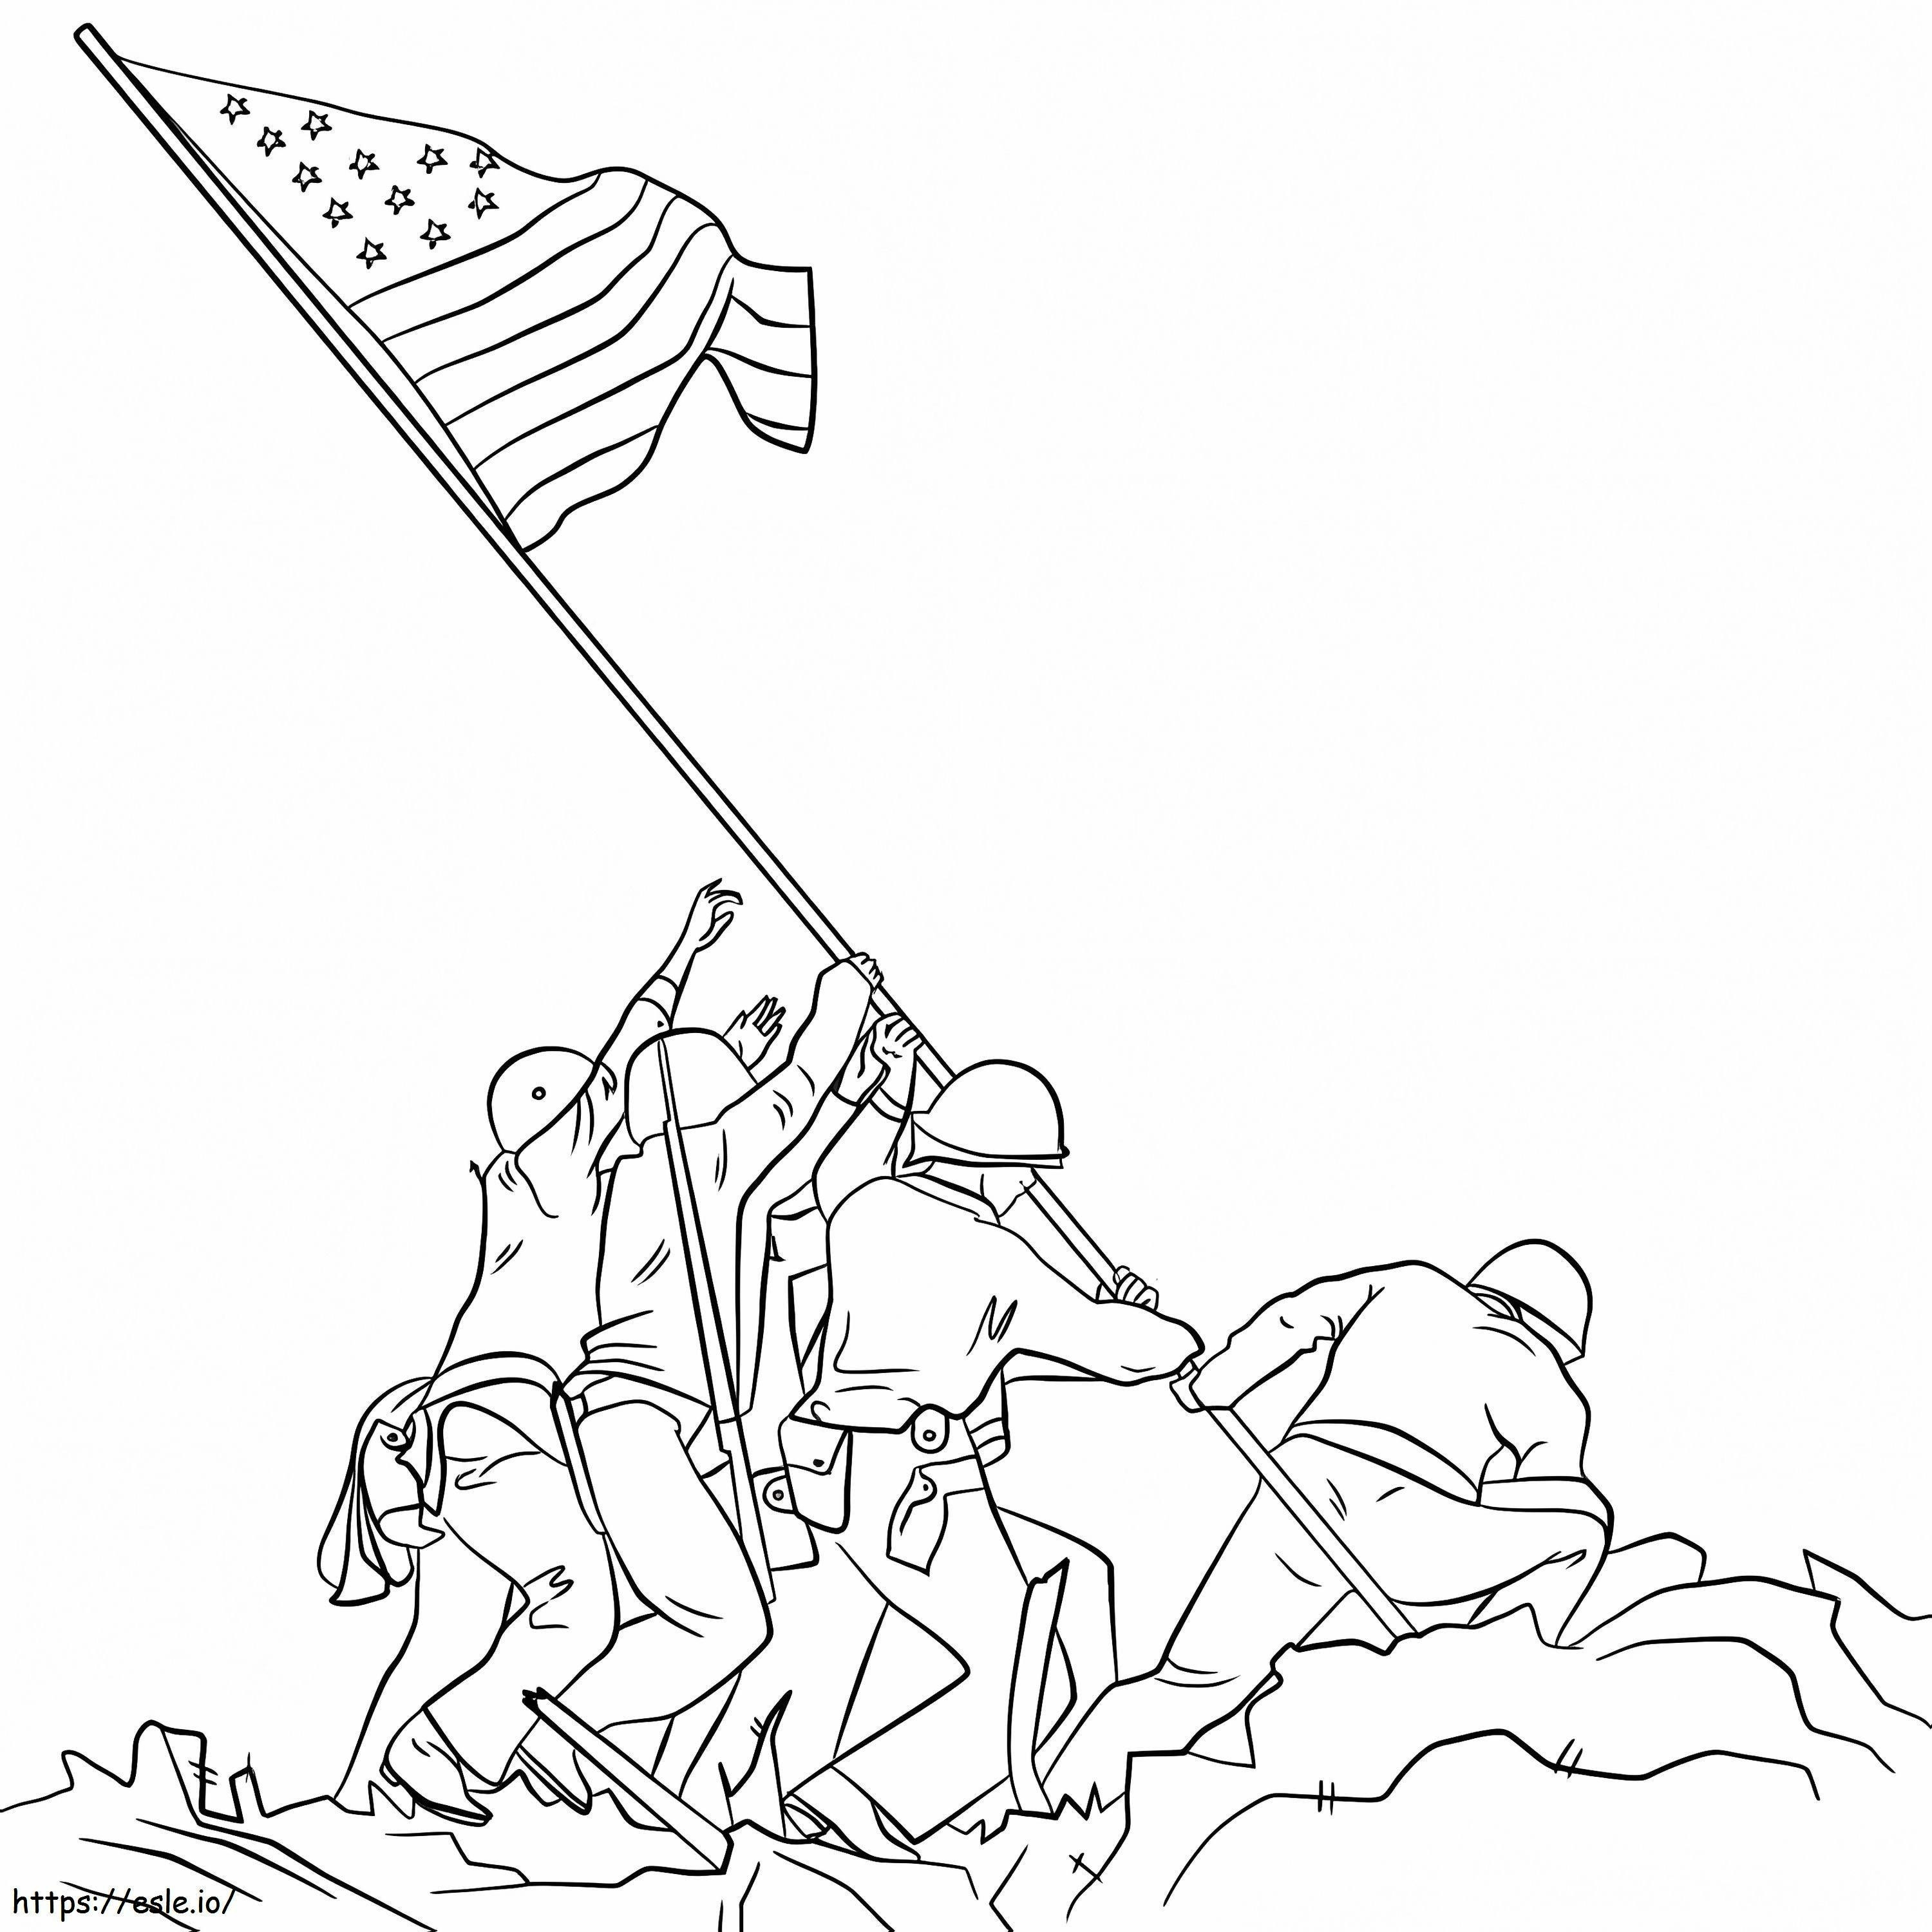 Levantando a bandeira em Lwo Jima para colorir